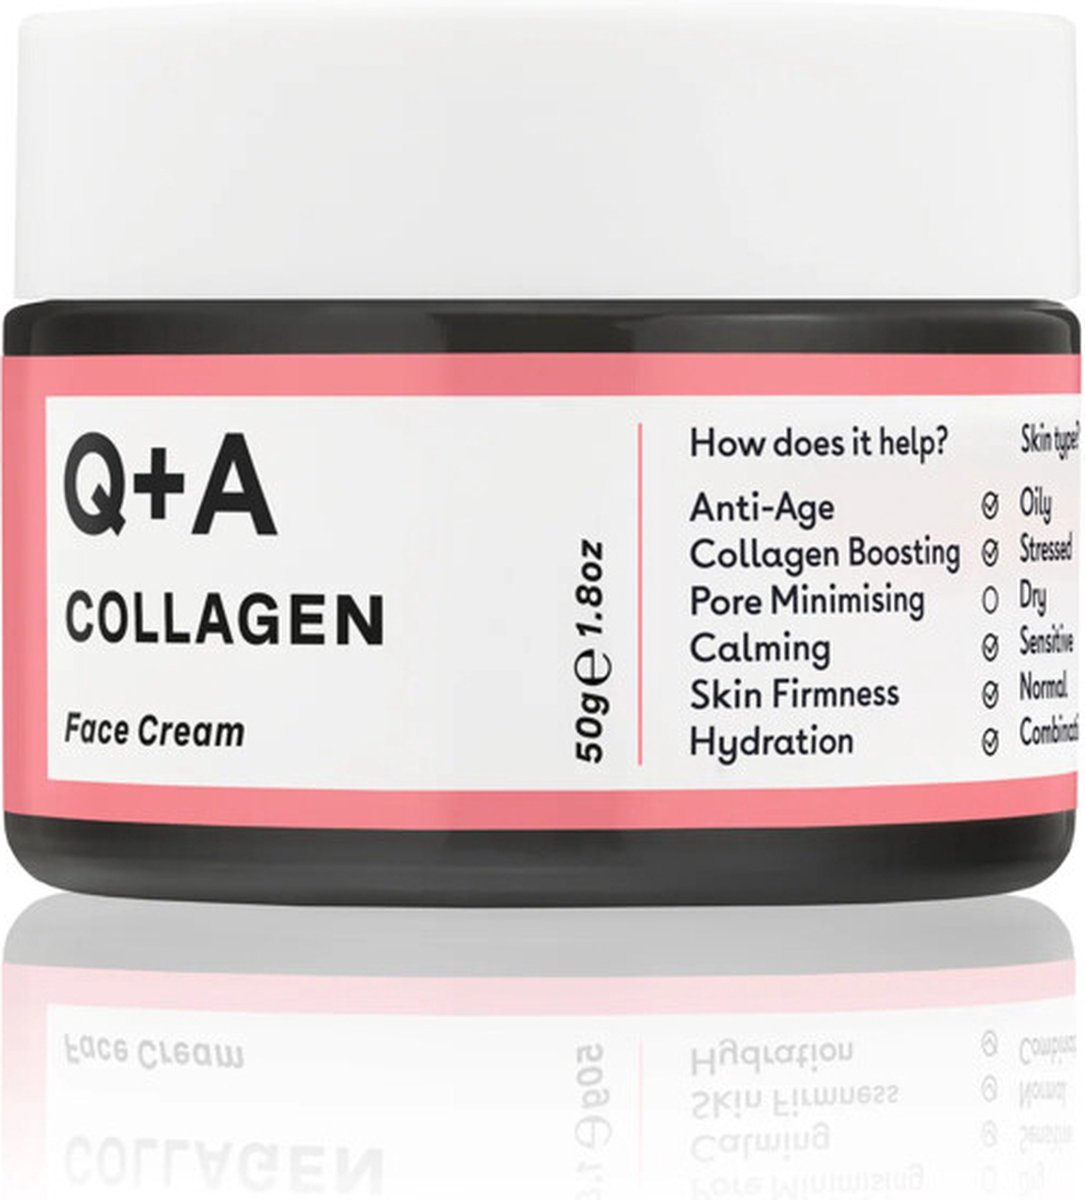 Q+a Collagen Face Cream. A Vegetarian, Seaweed Derived Collagen Cream For Ageing